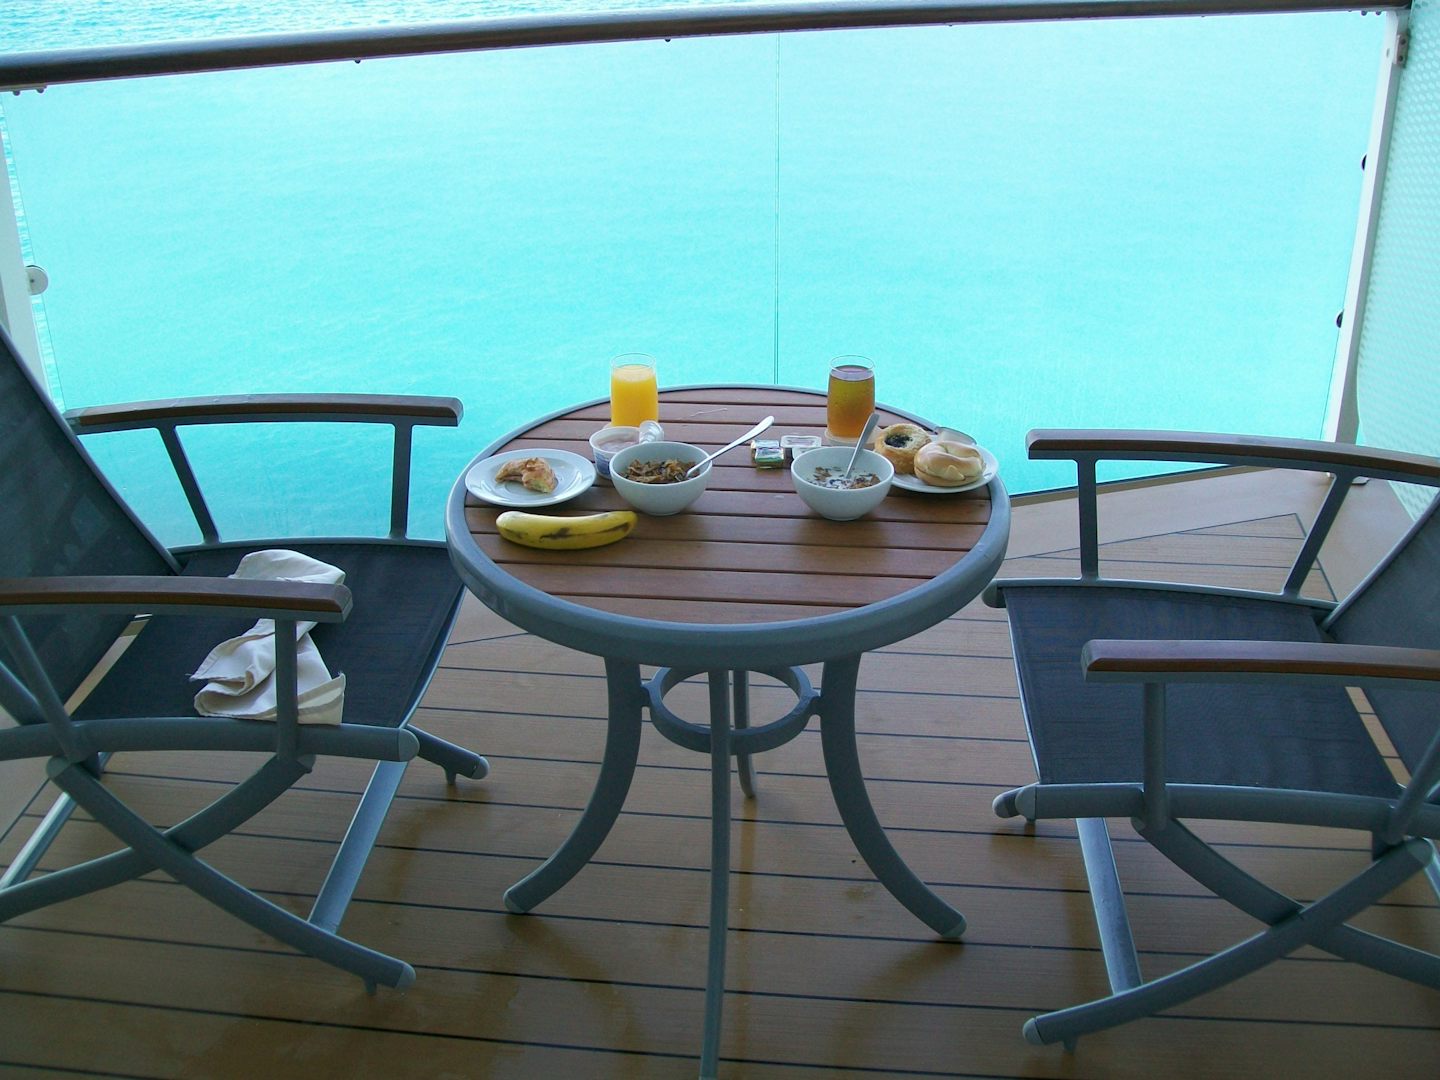 Room Service breakfast on the Balcony.